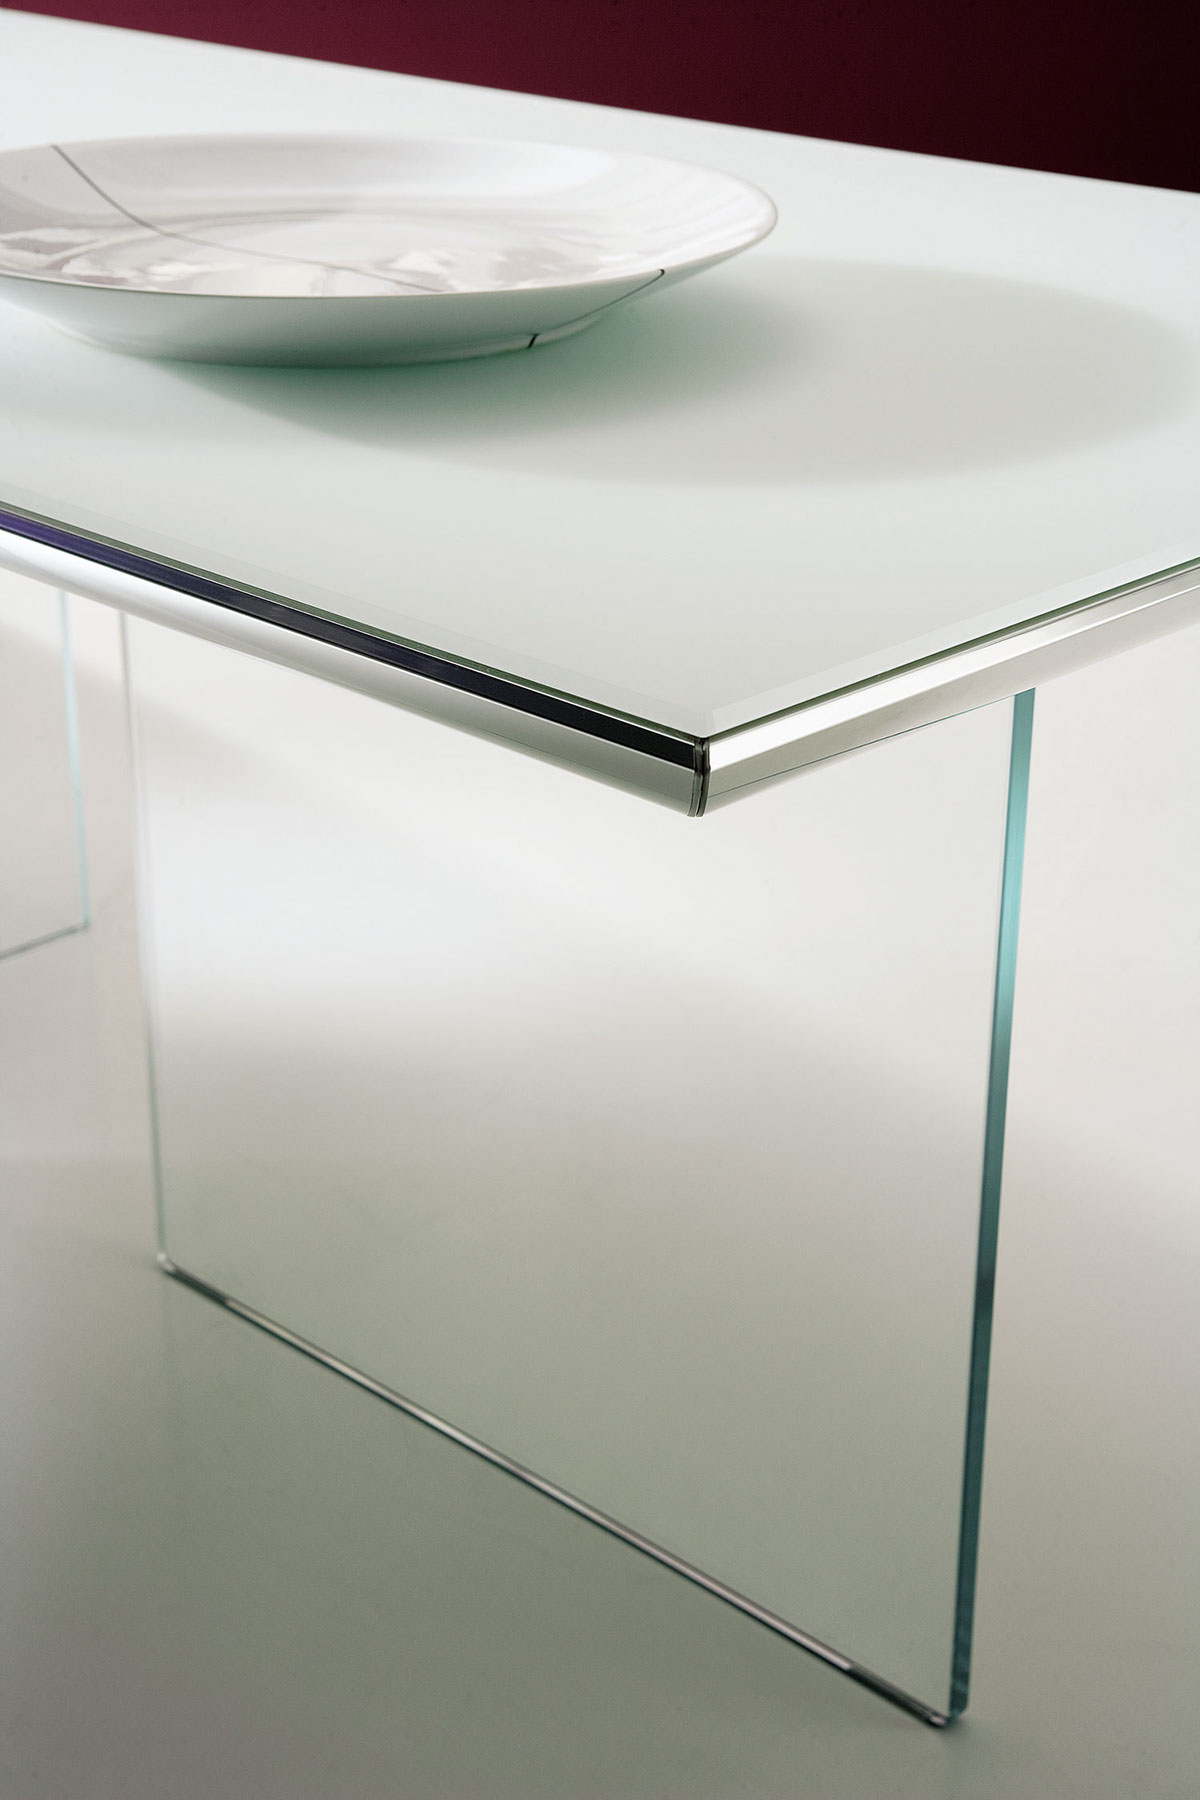 Extandable table desk workstation glas ozzio italia modern Interior luxury